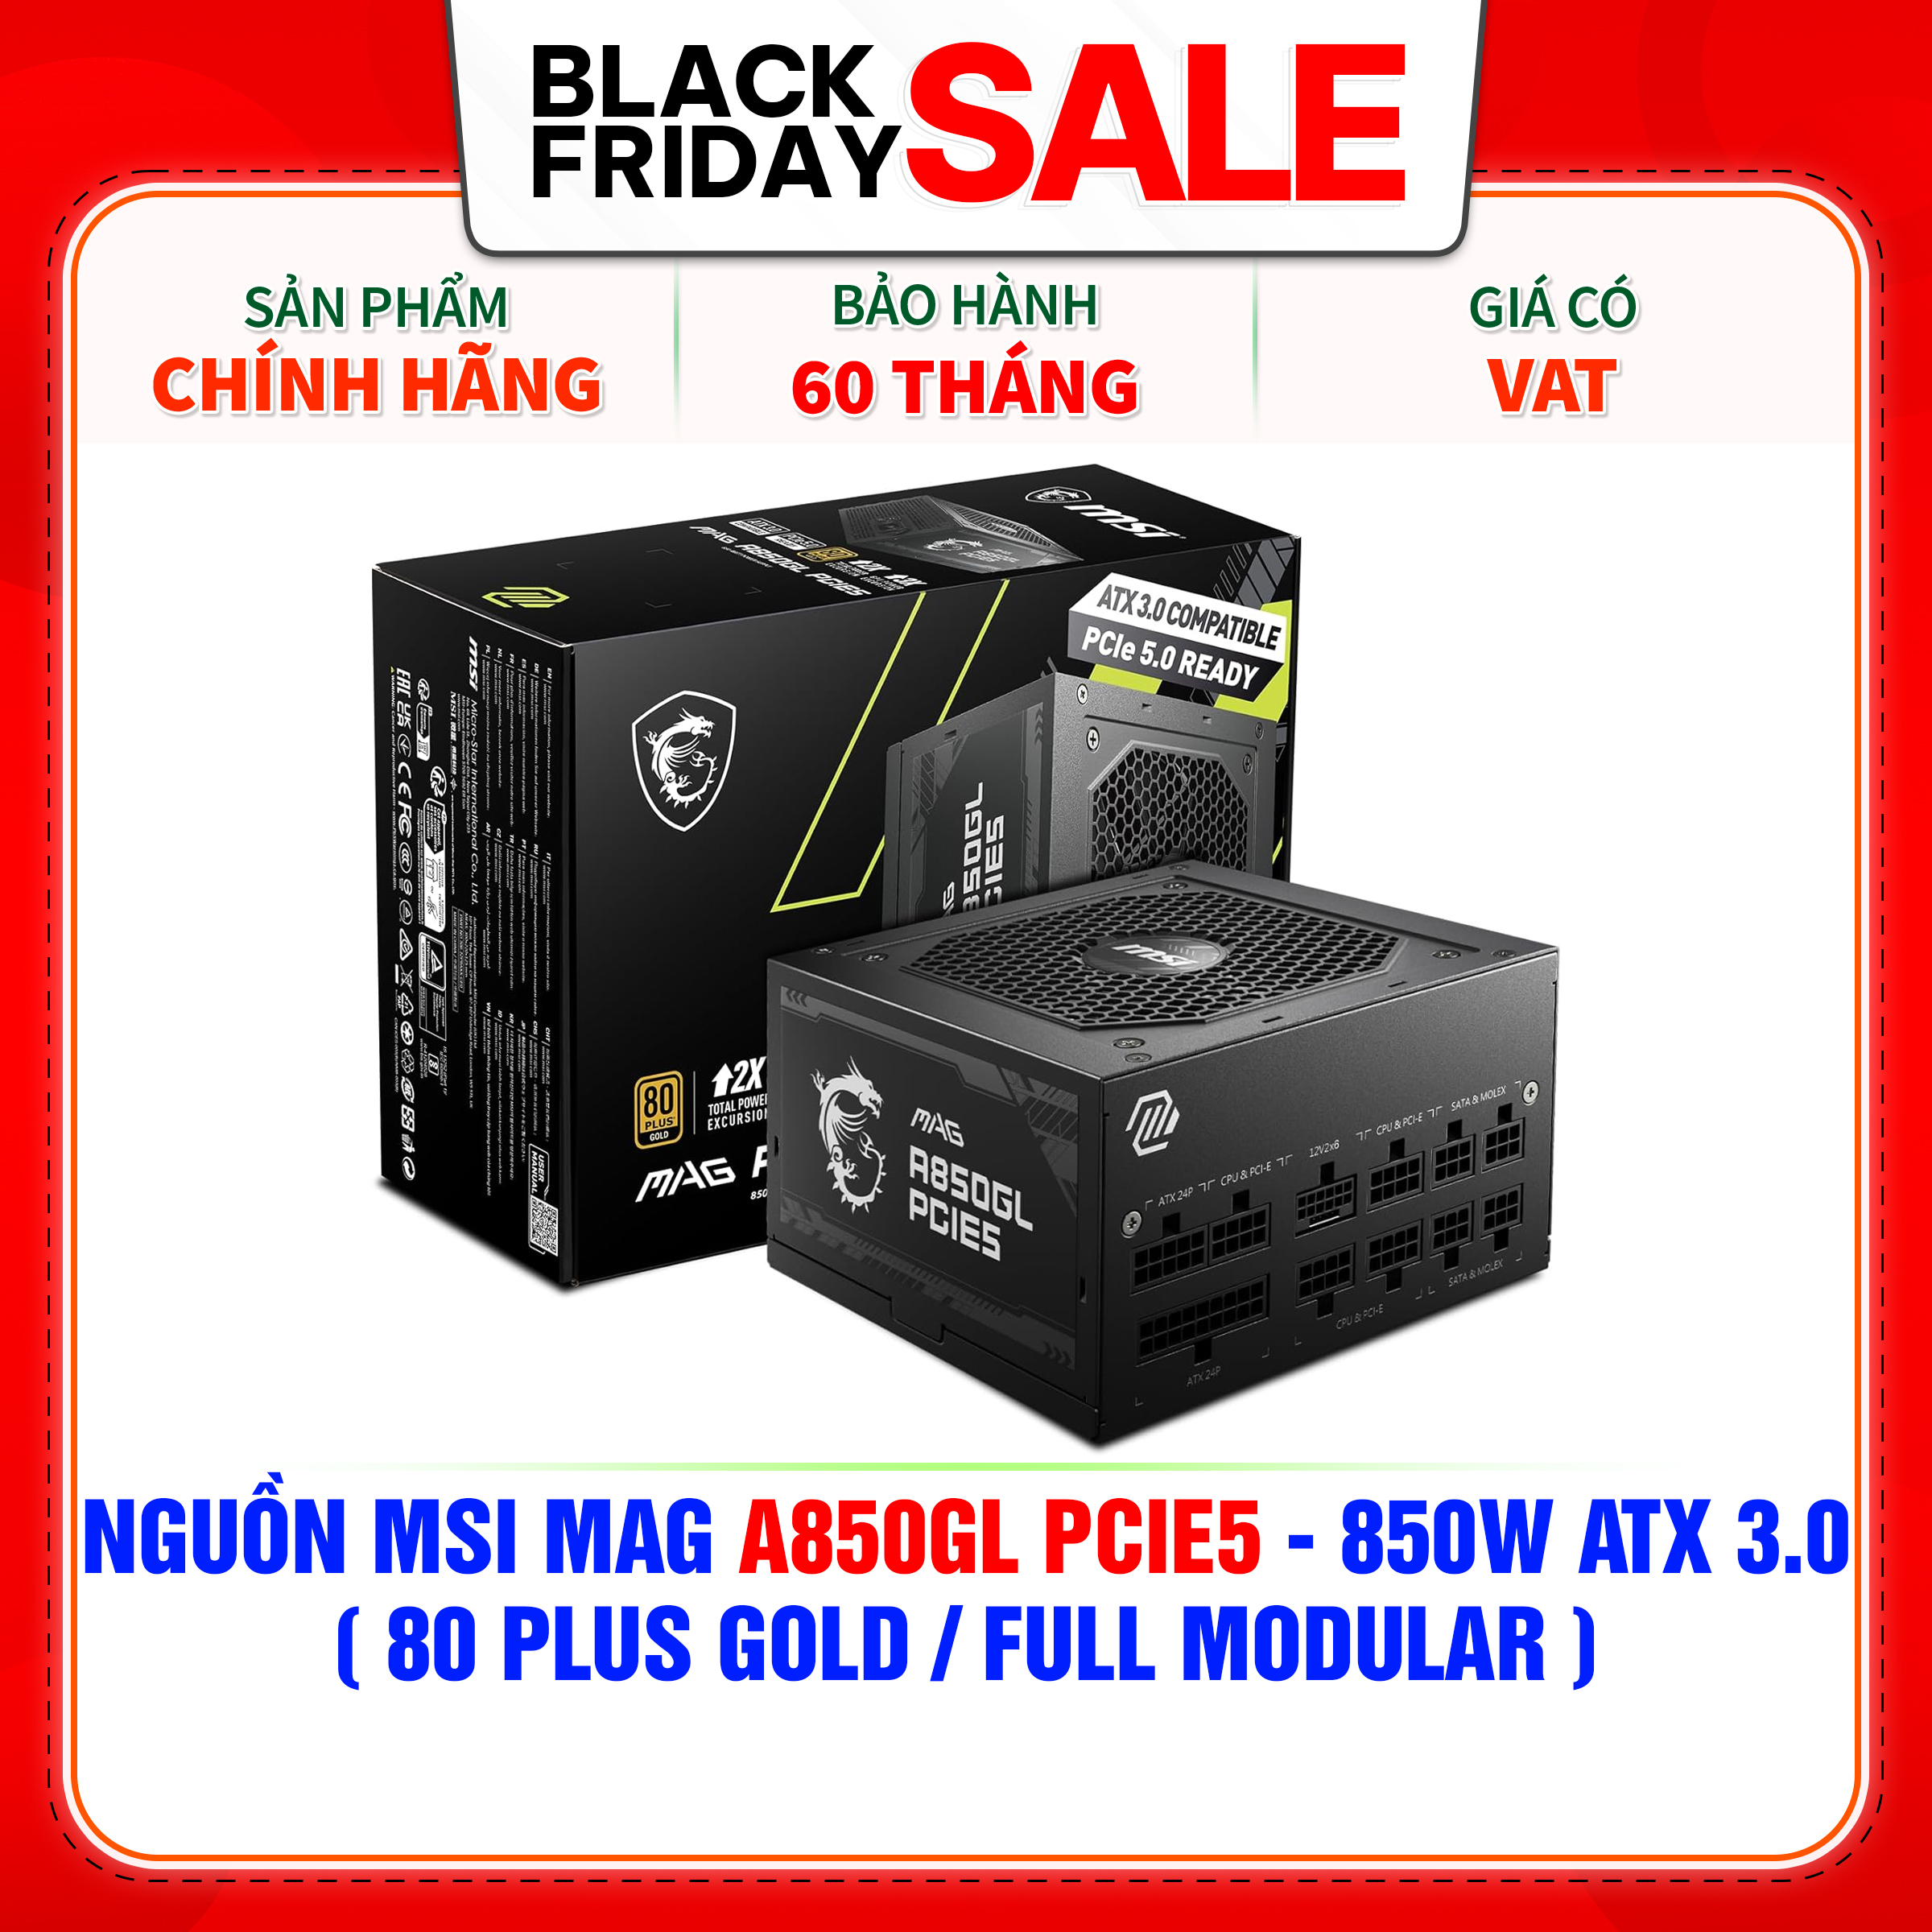 NGUỒN MSI MAG A850GL PCIE5 - 850W ATX 3.0  80 PLUS GOLD FULL MODULAR